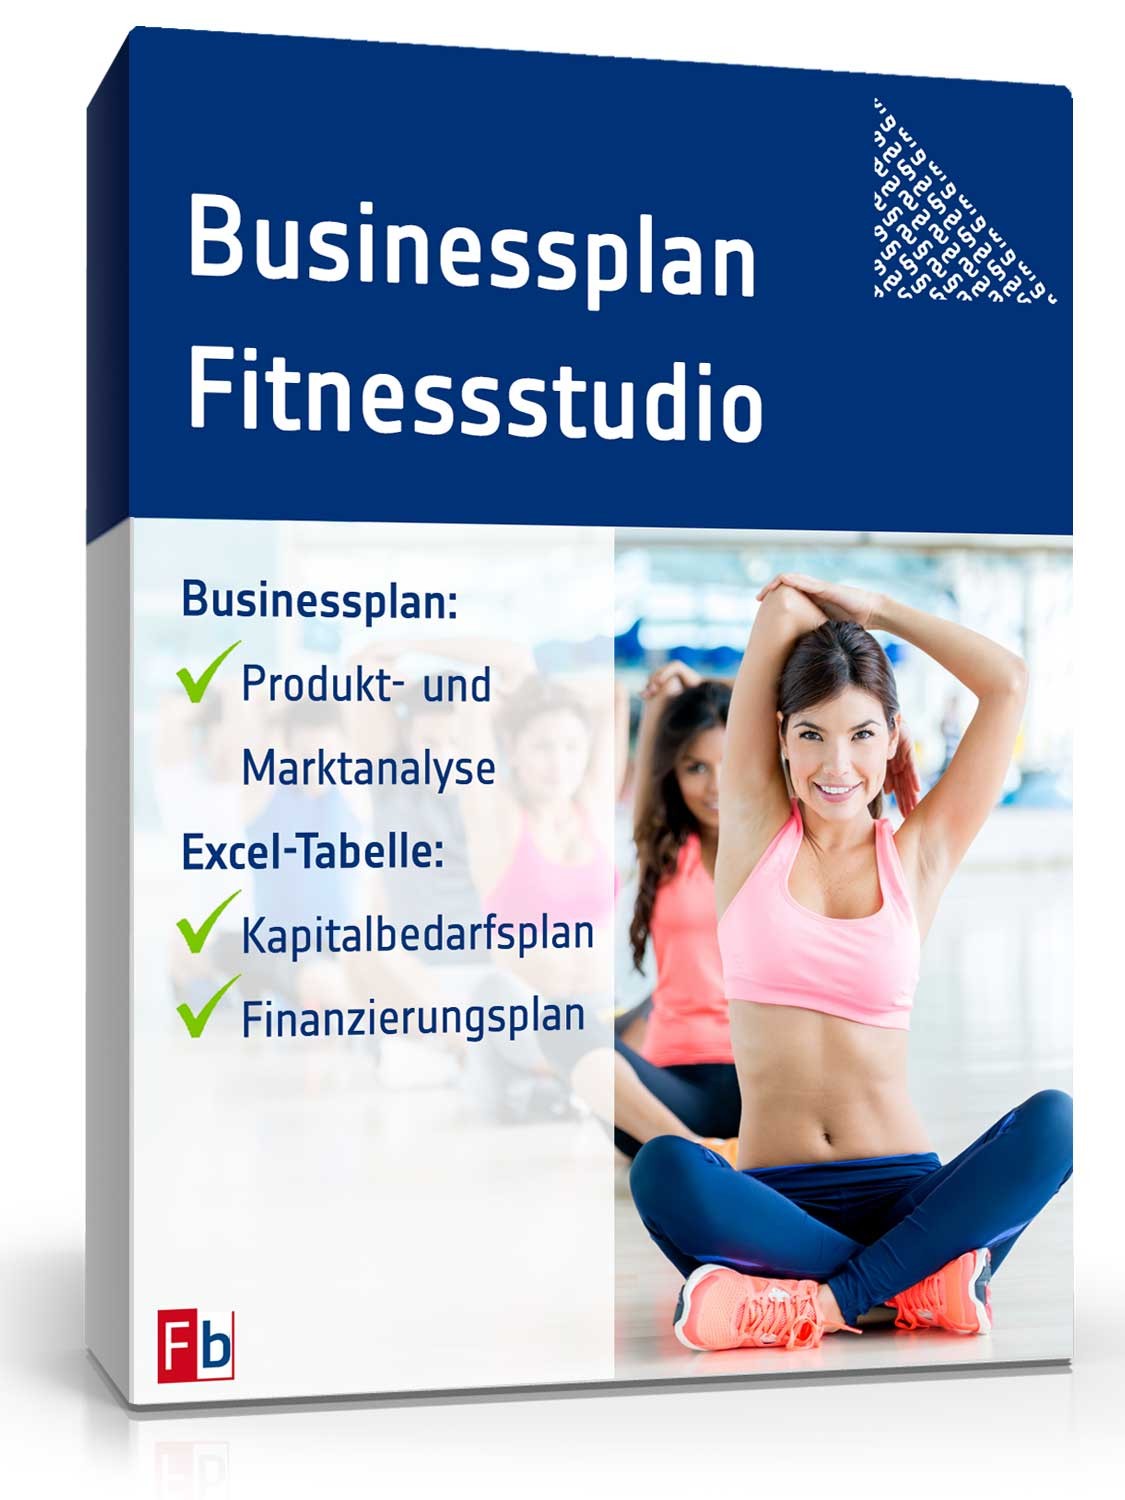 Hauptbild des Produkts: Businessplan Fitnessstudio